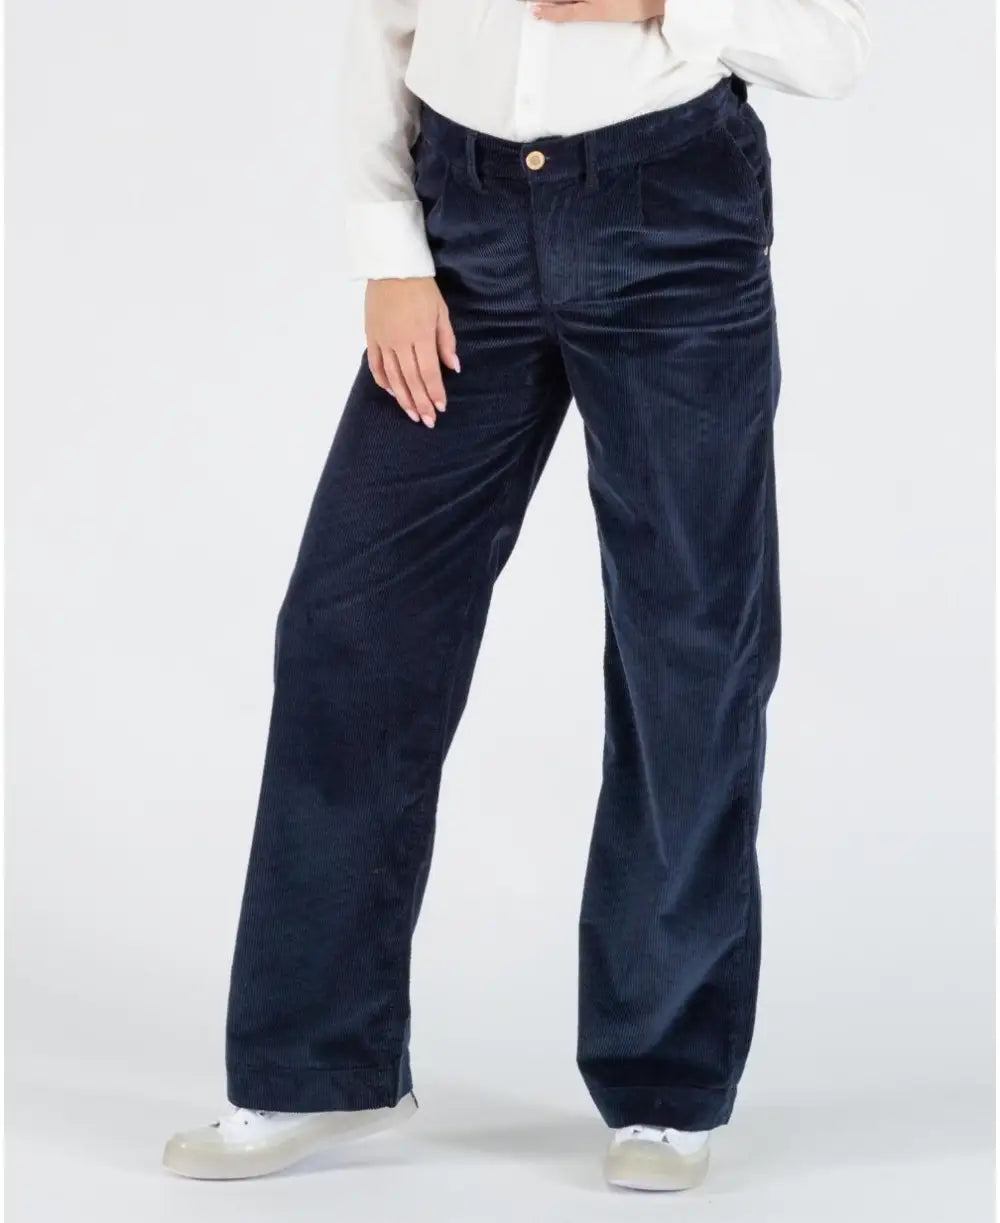 Clyde maternity velvet pants navy - Pantalons